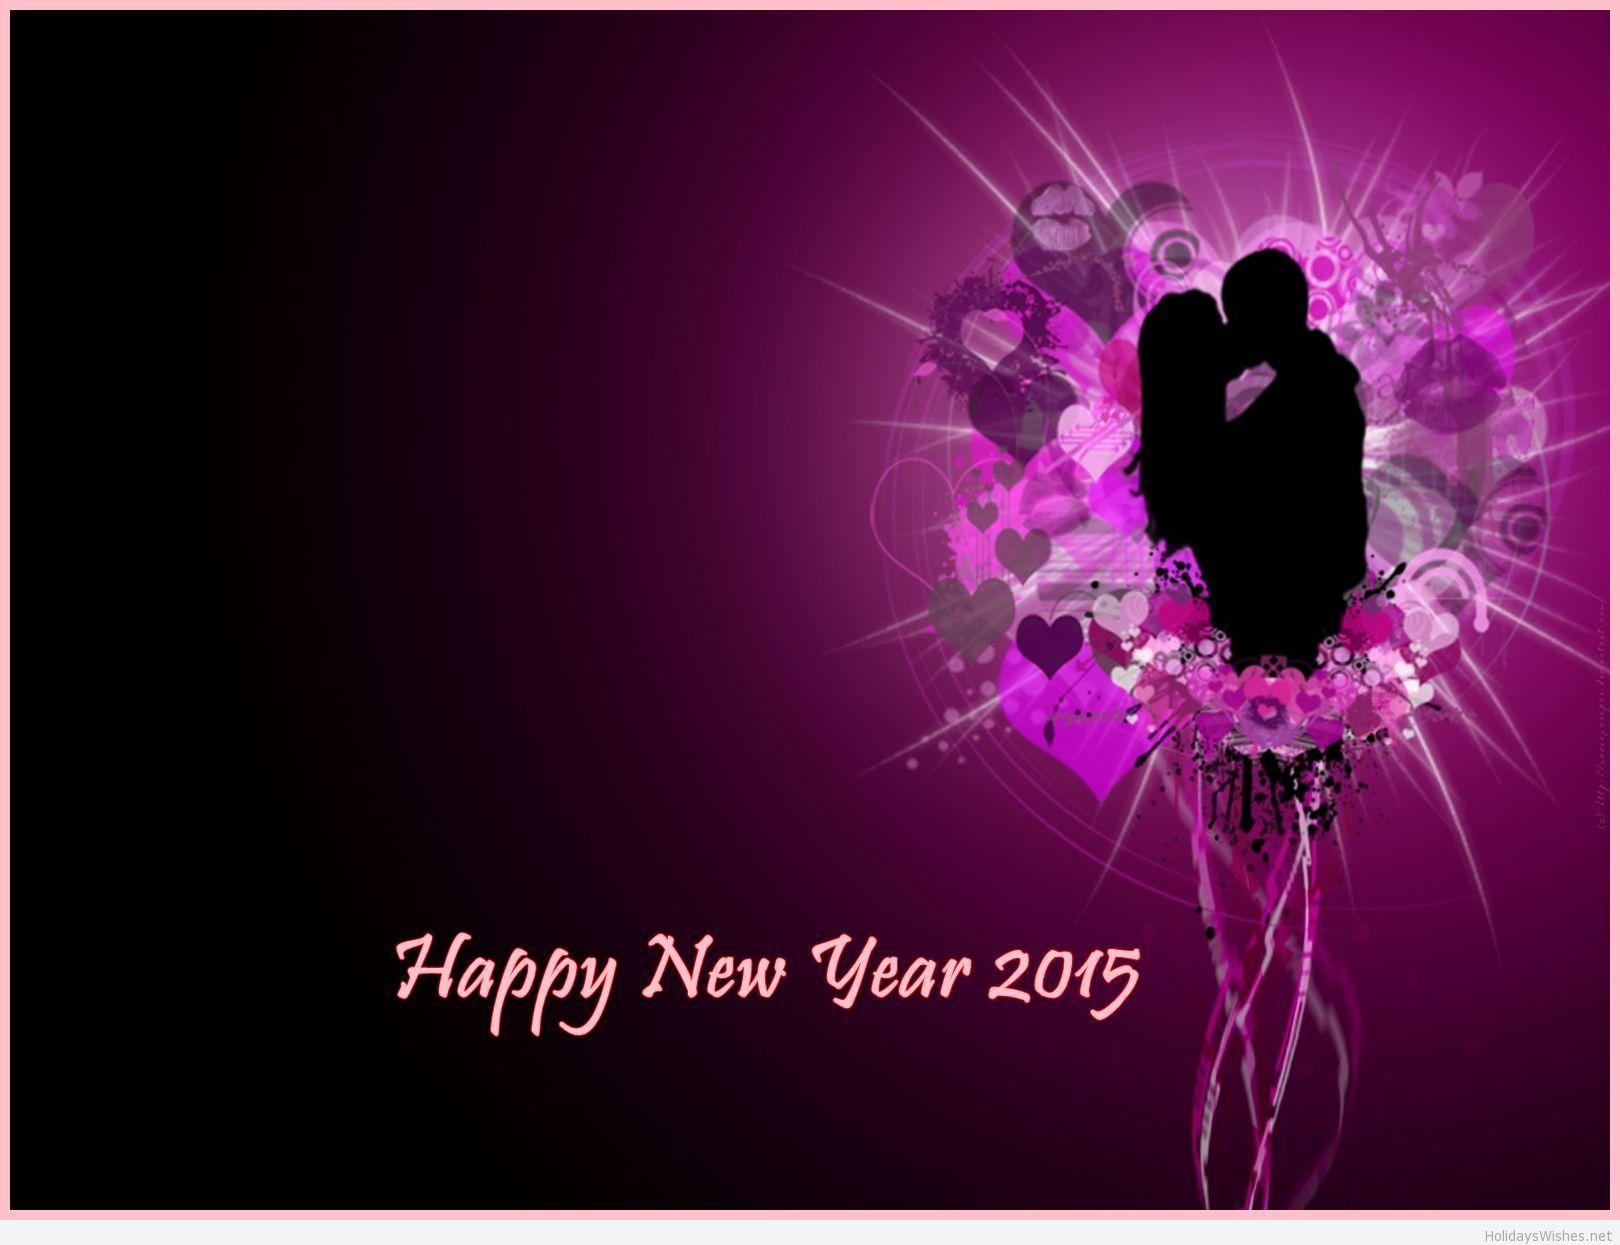 Love night kiss new year 2015